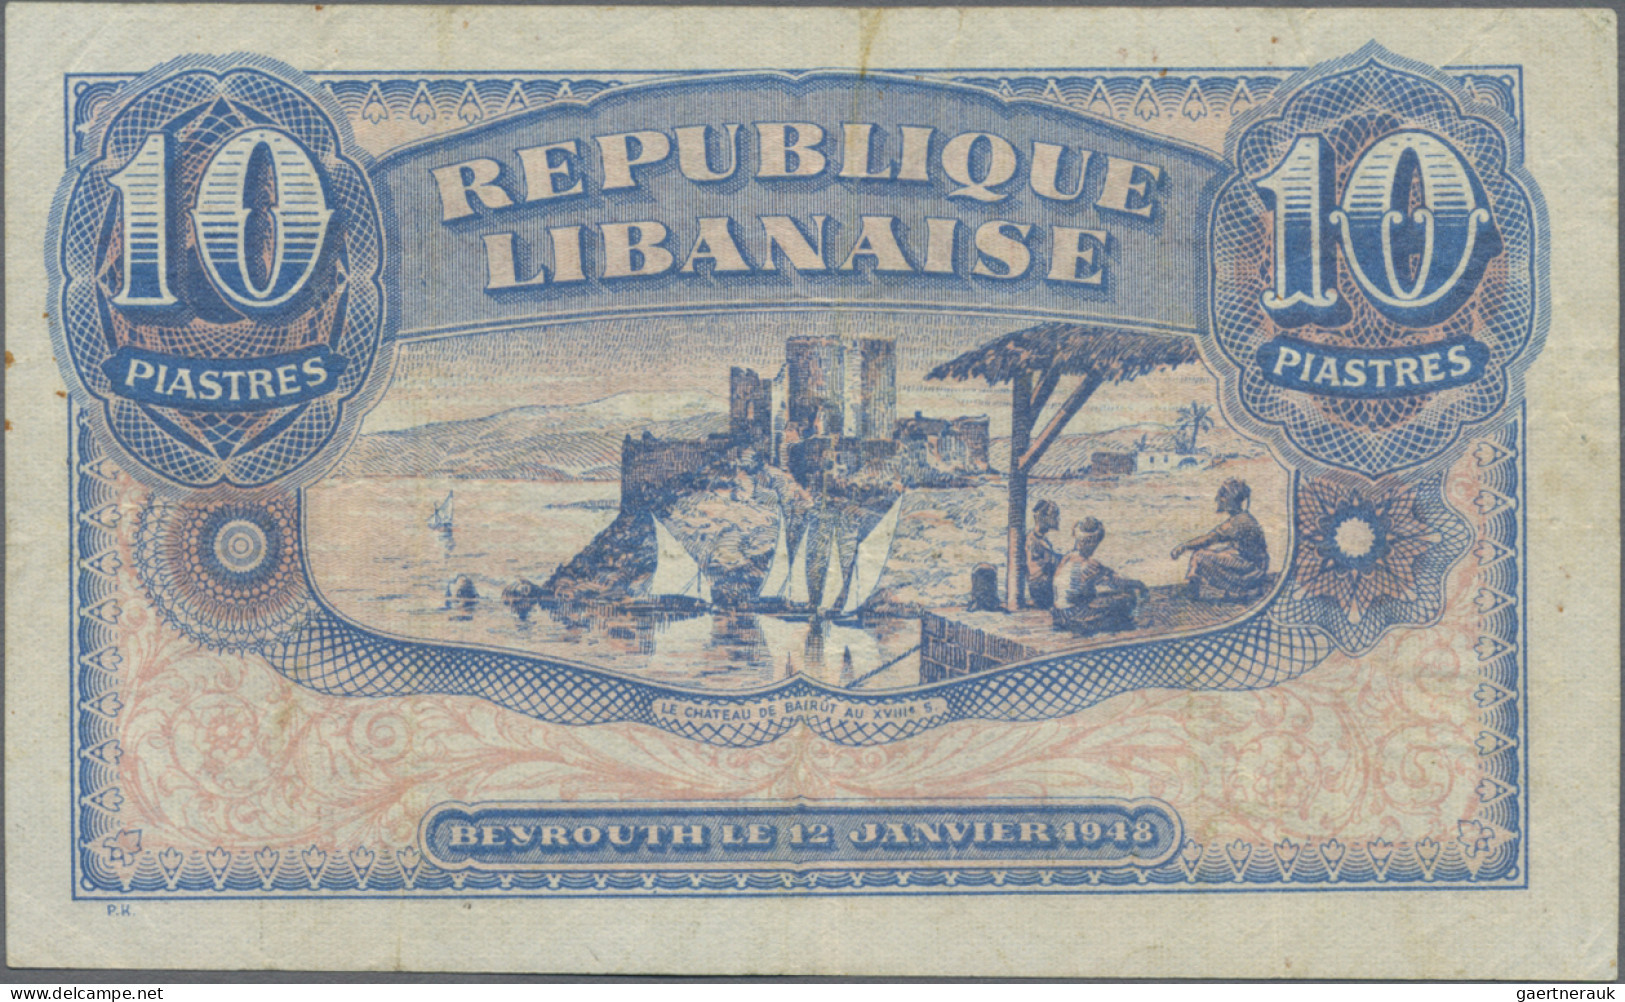 Lebanon: République Libanaise, set with 6 banknotes, 1944-1950 series, with 5 an